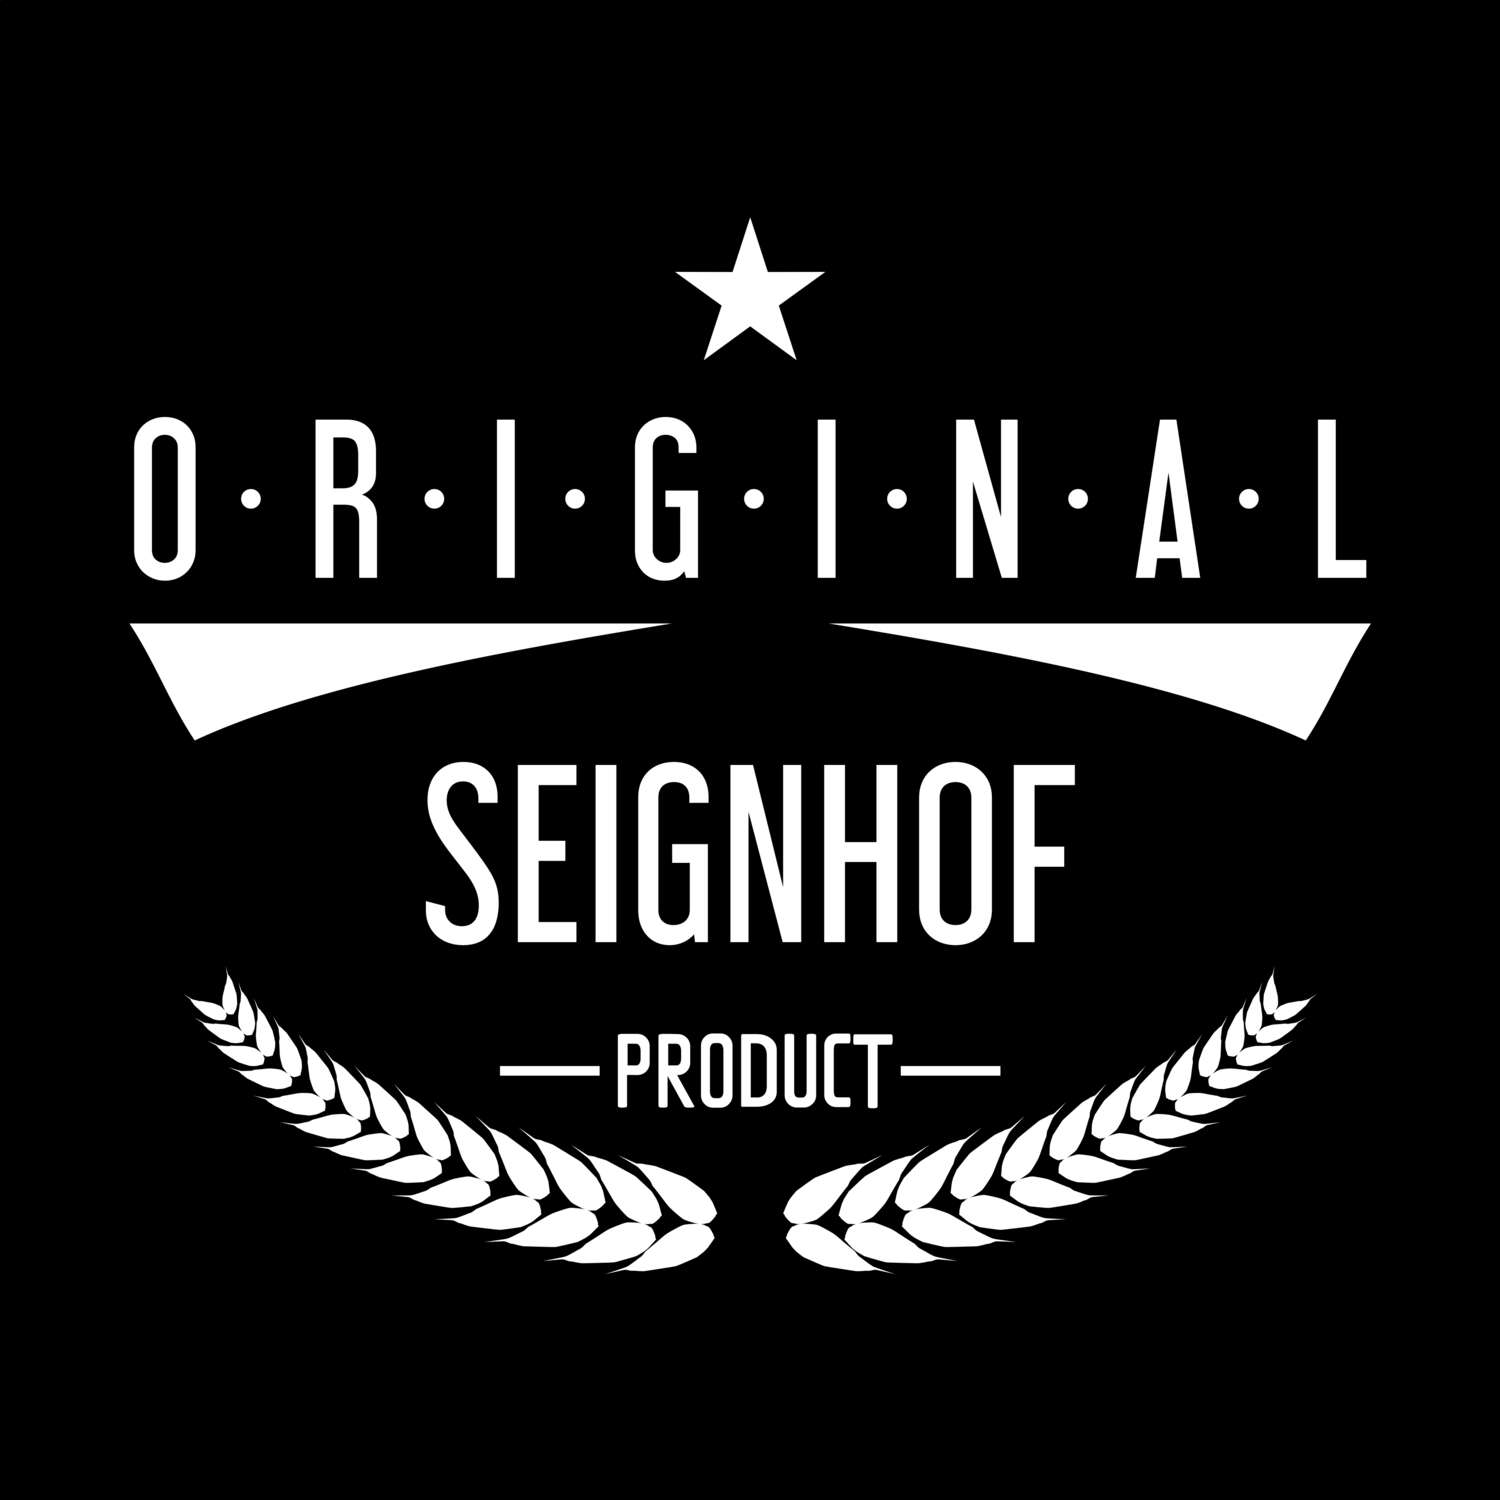 Seignhof T-Shirt »Original Product«